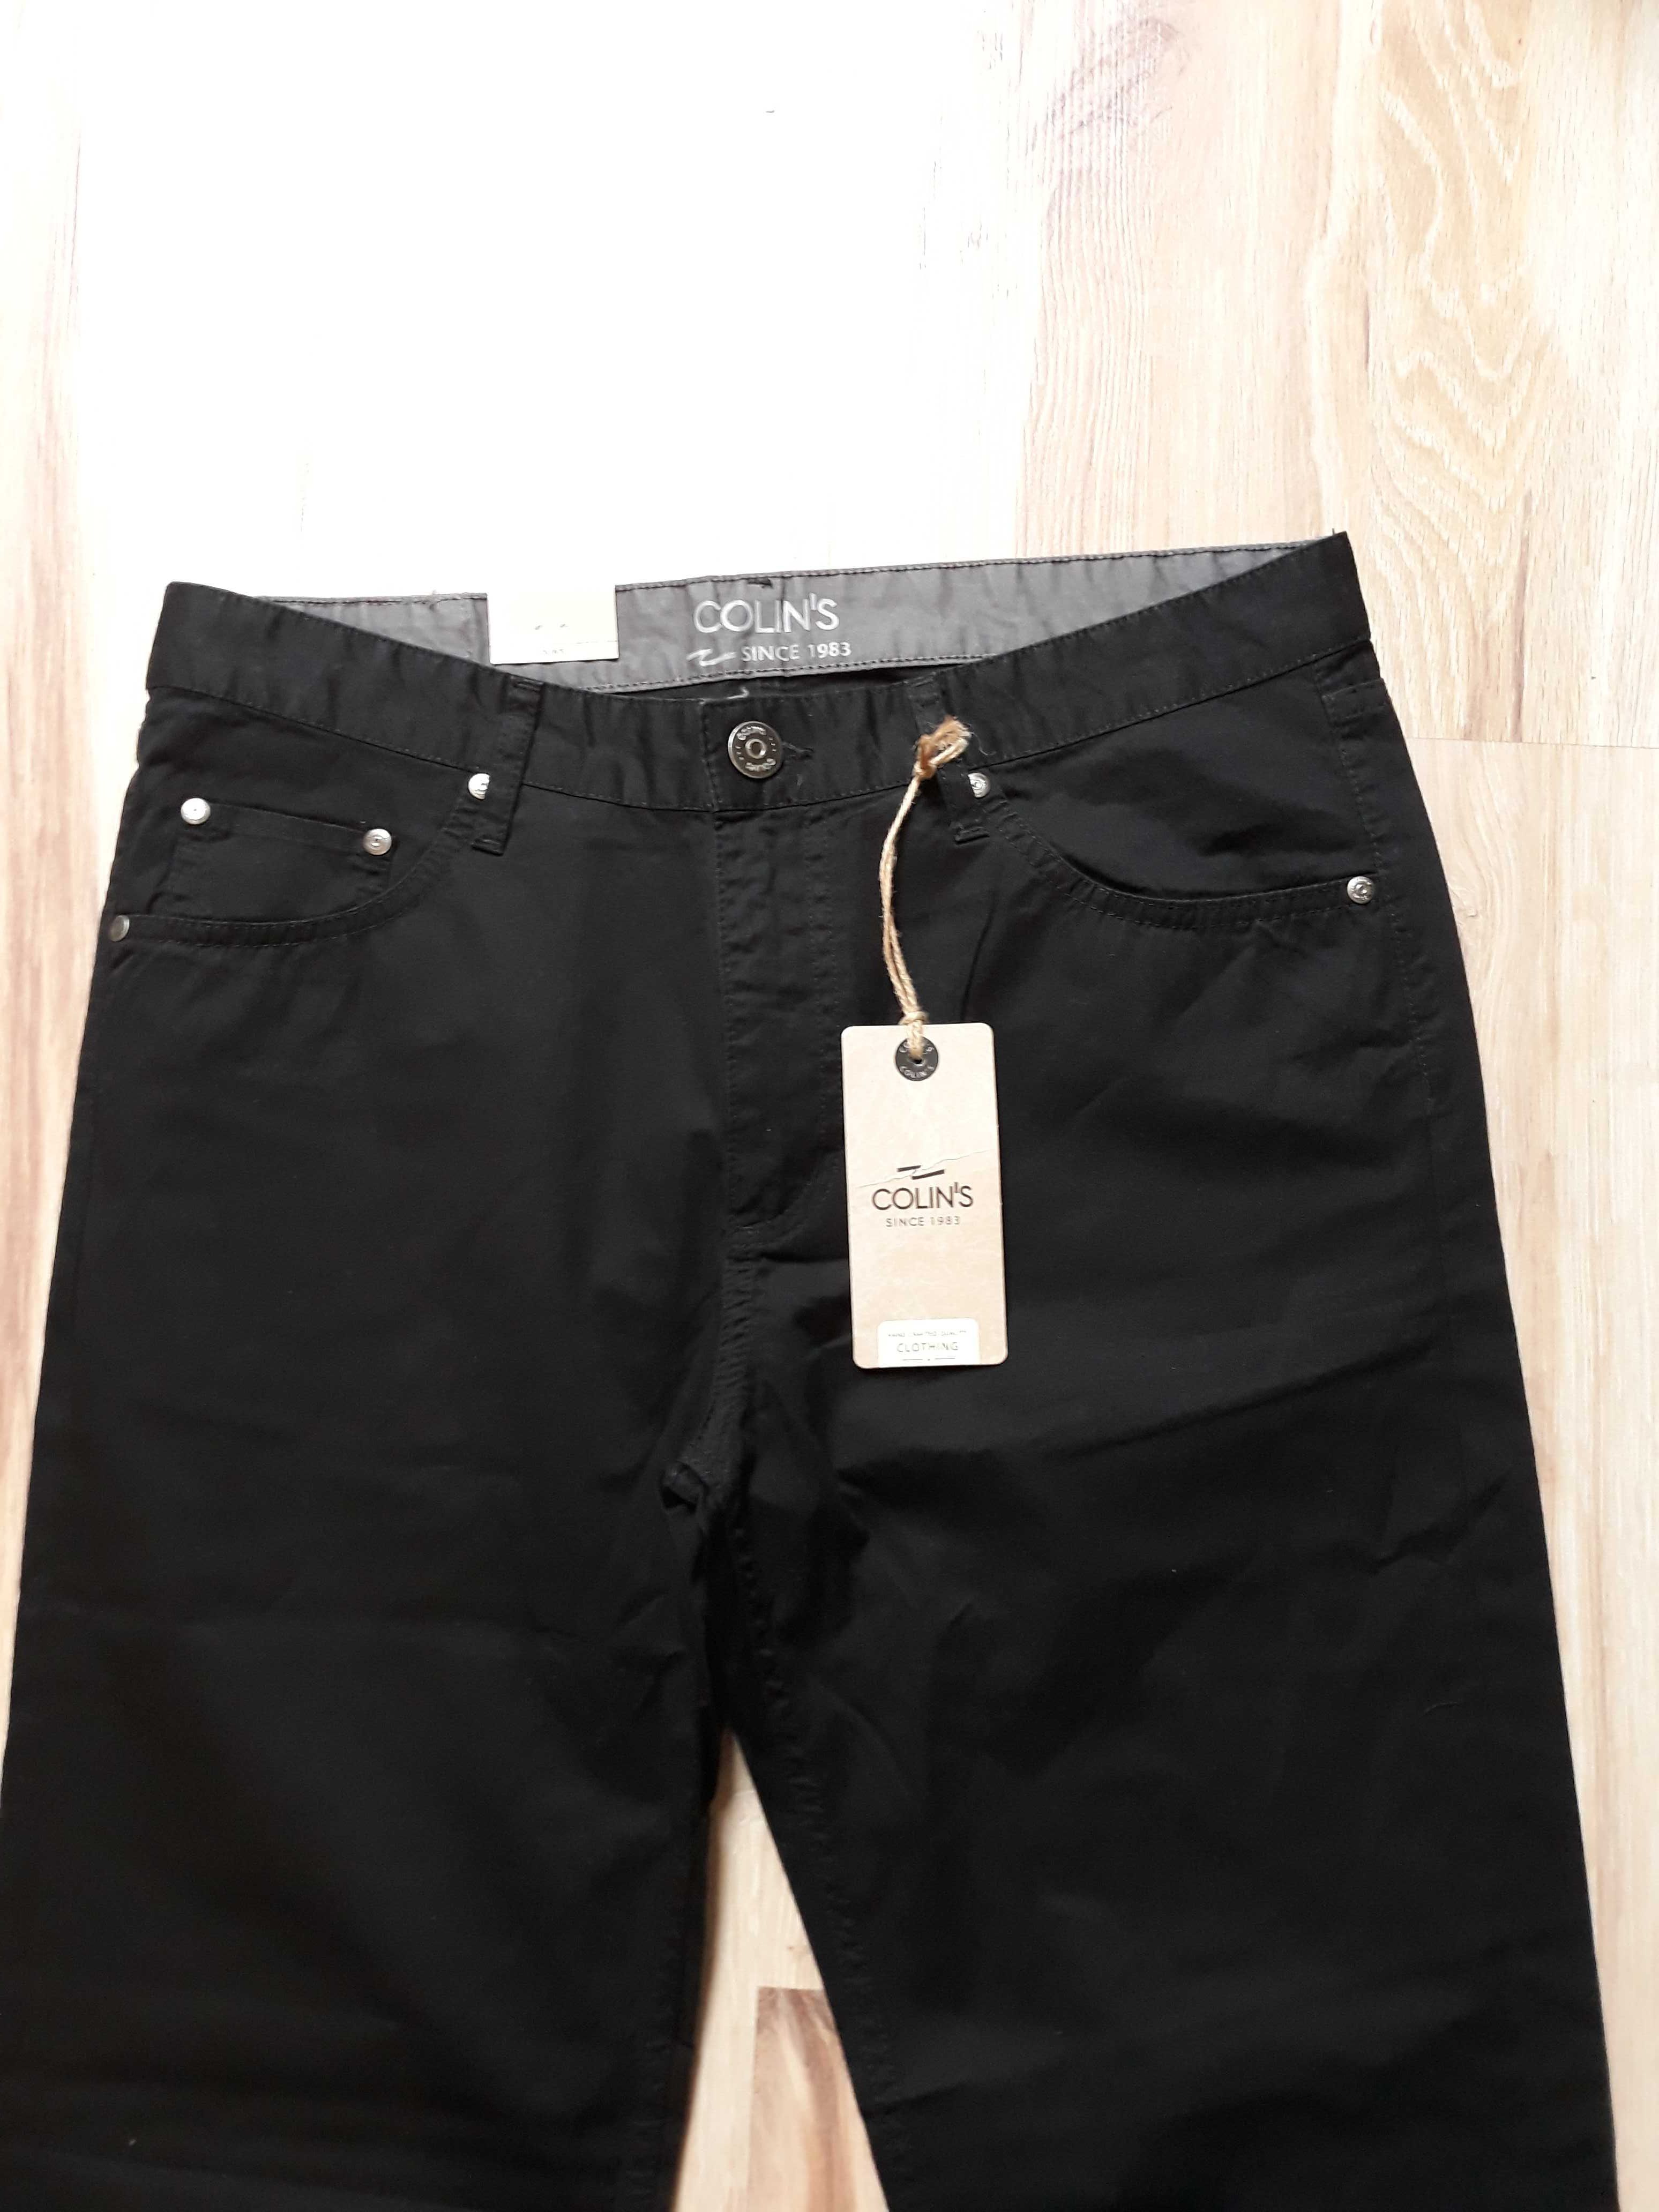 Spodnie męskie materiałowe czarne Colins M/L